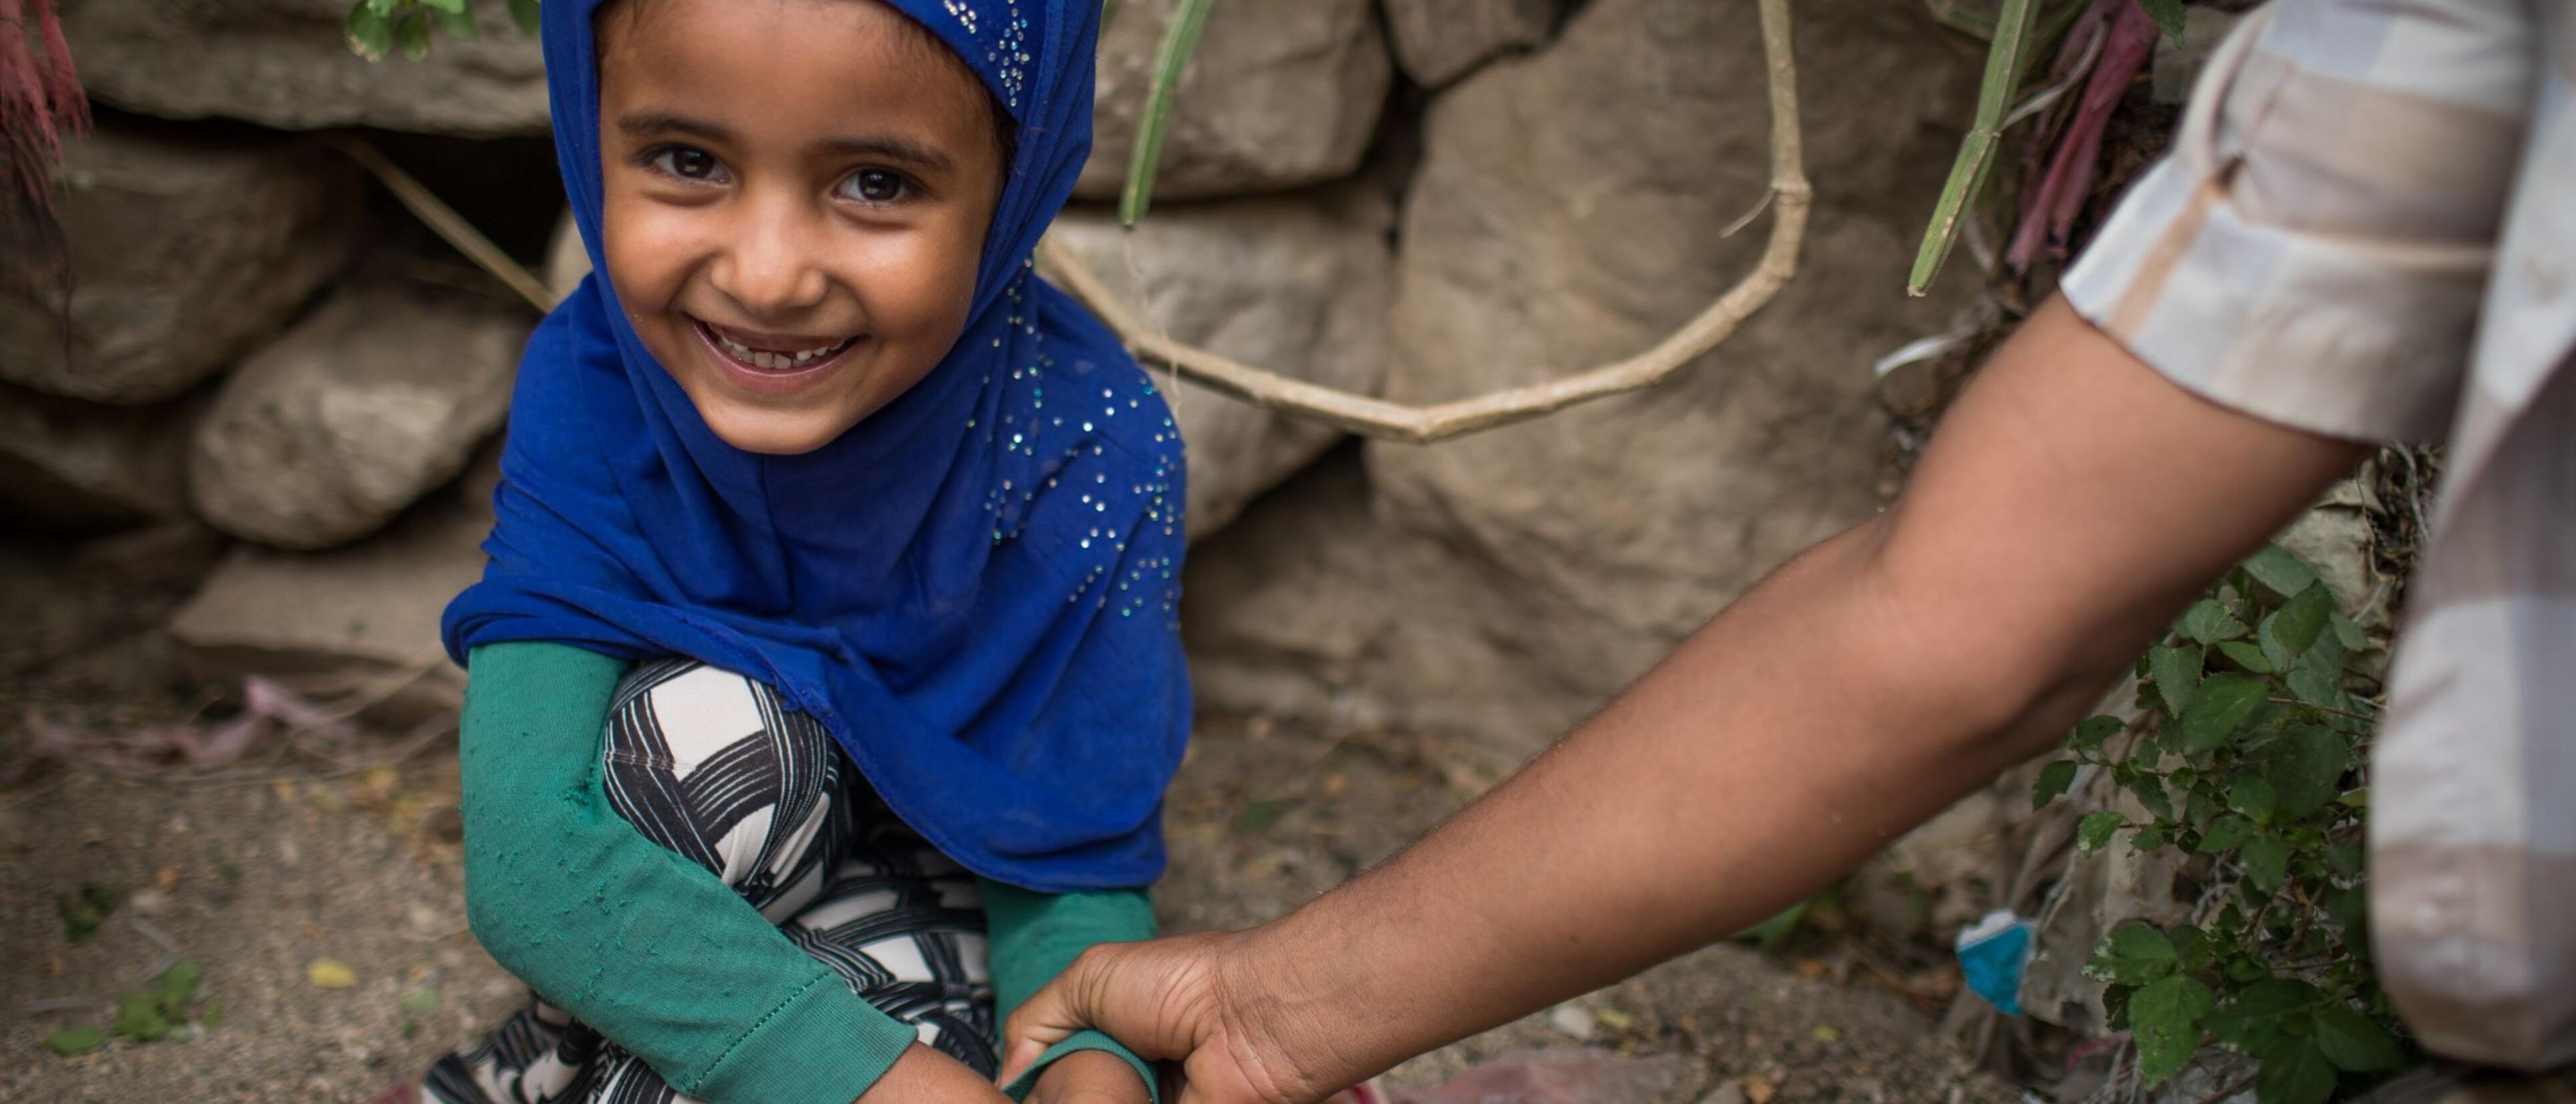 A young girl in Yemen